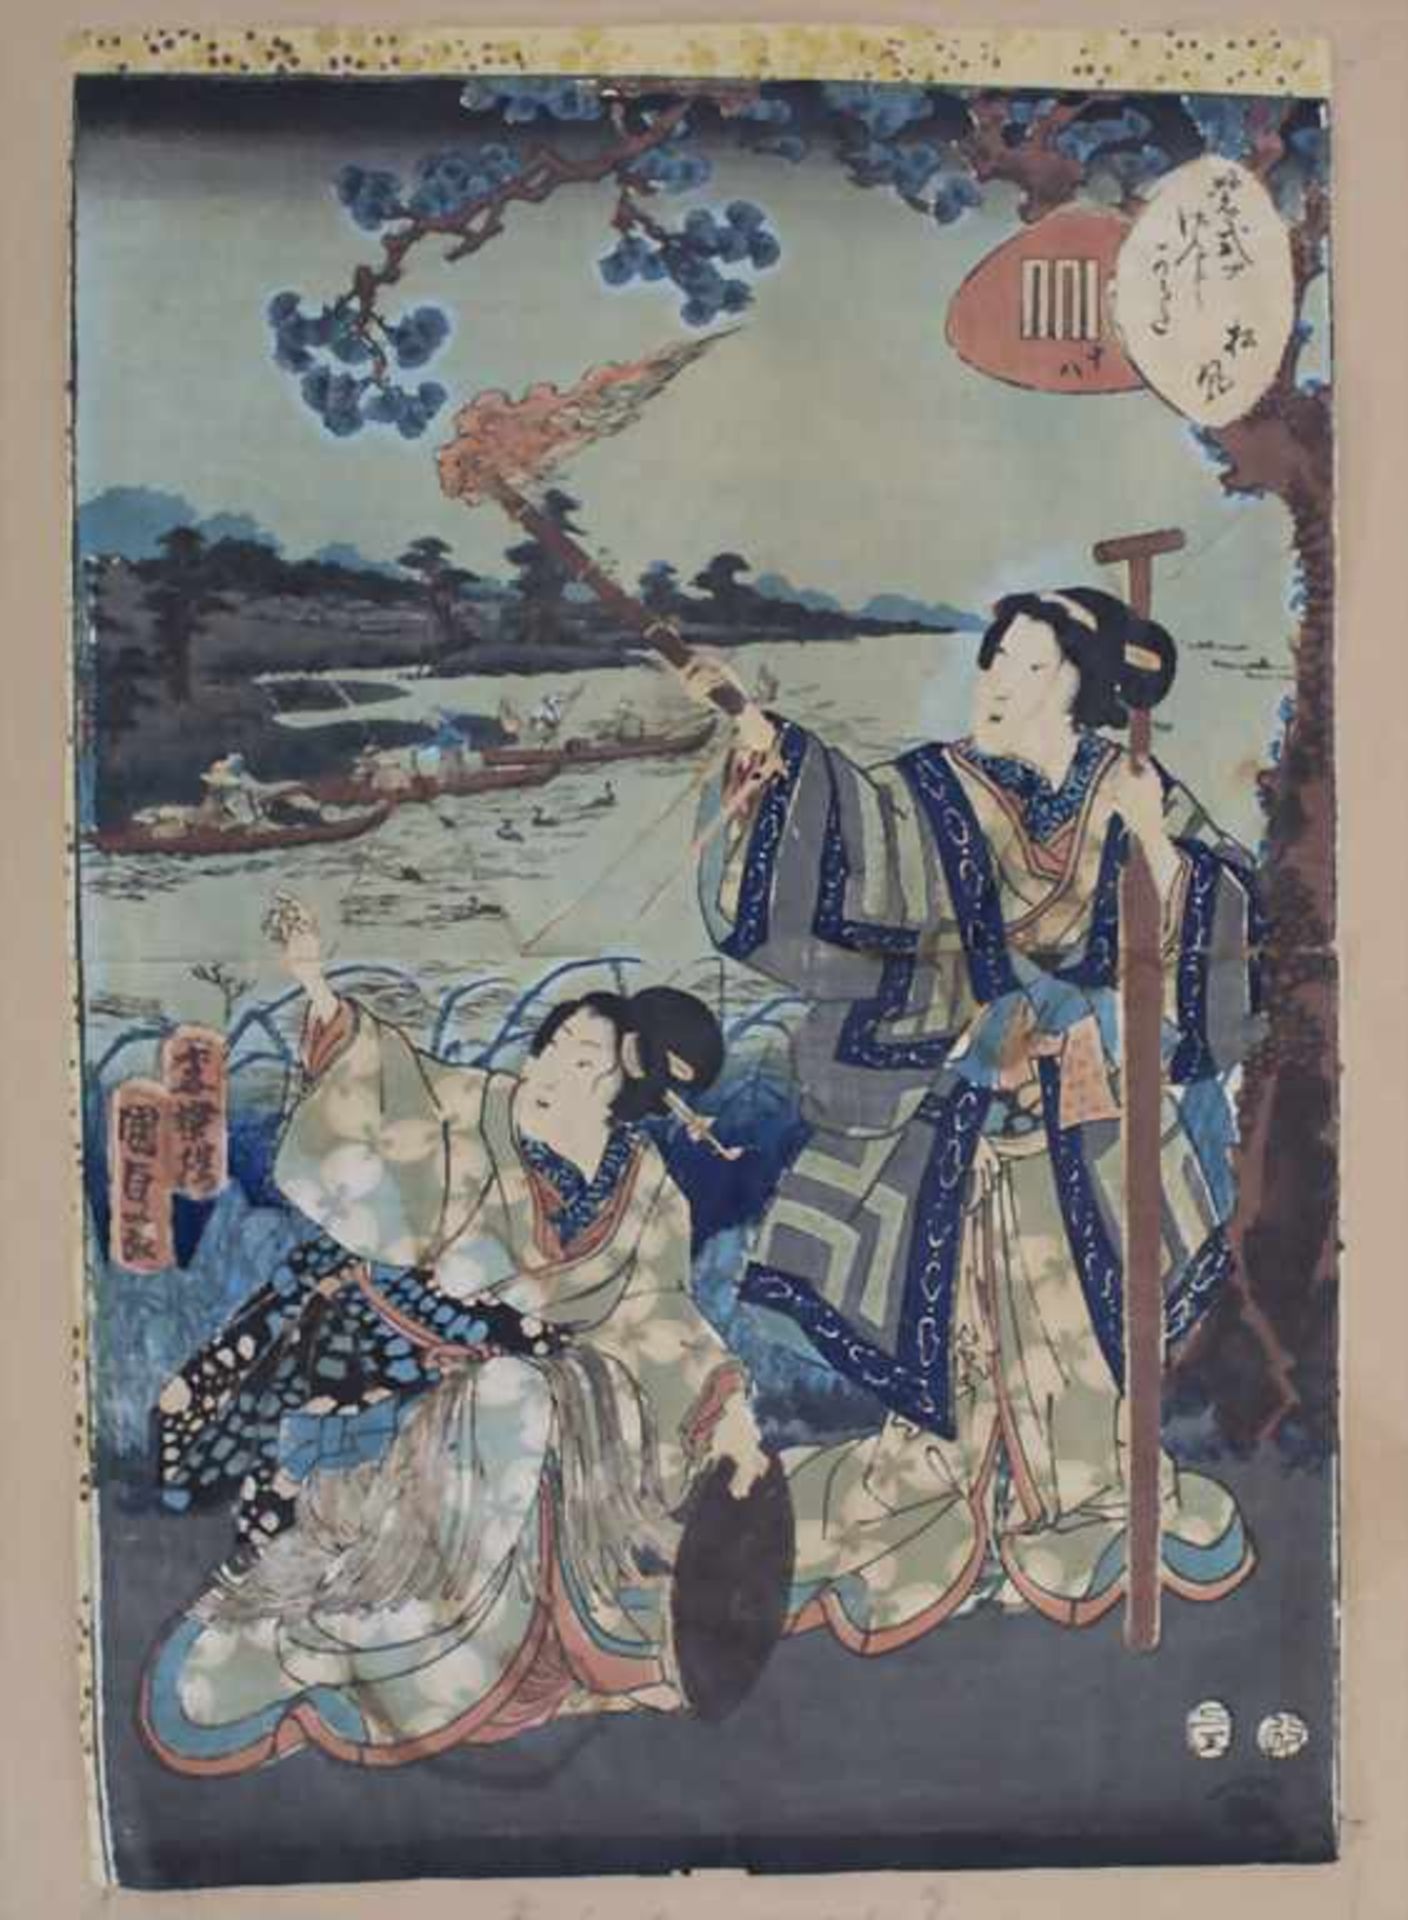 Utagawa Kuisada (1786-1865), 'Geishas am Ufer vor Booten' / 'Geishas by the shore with boats'